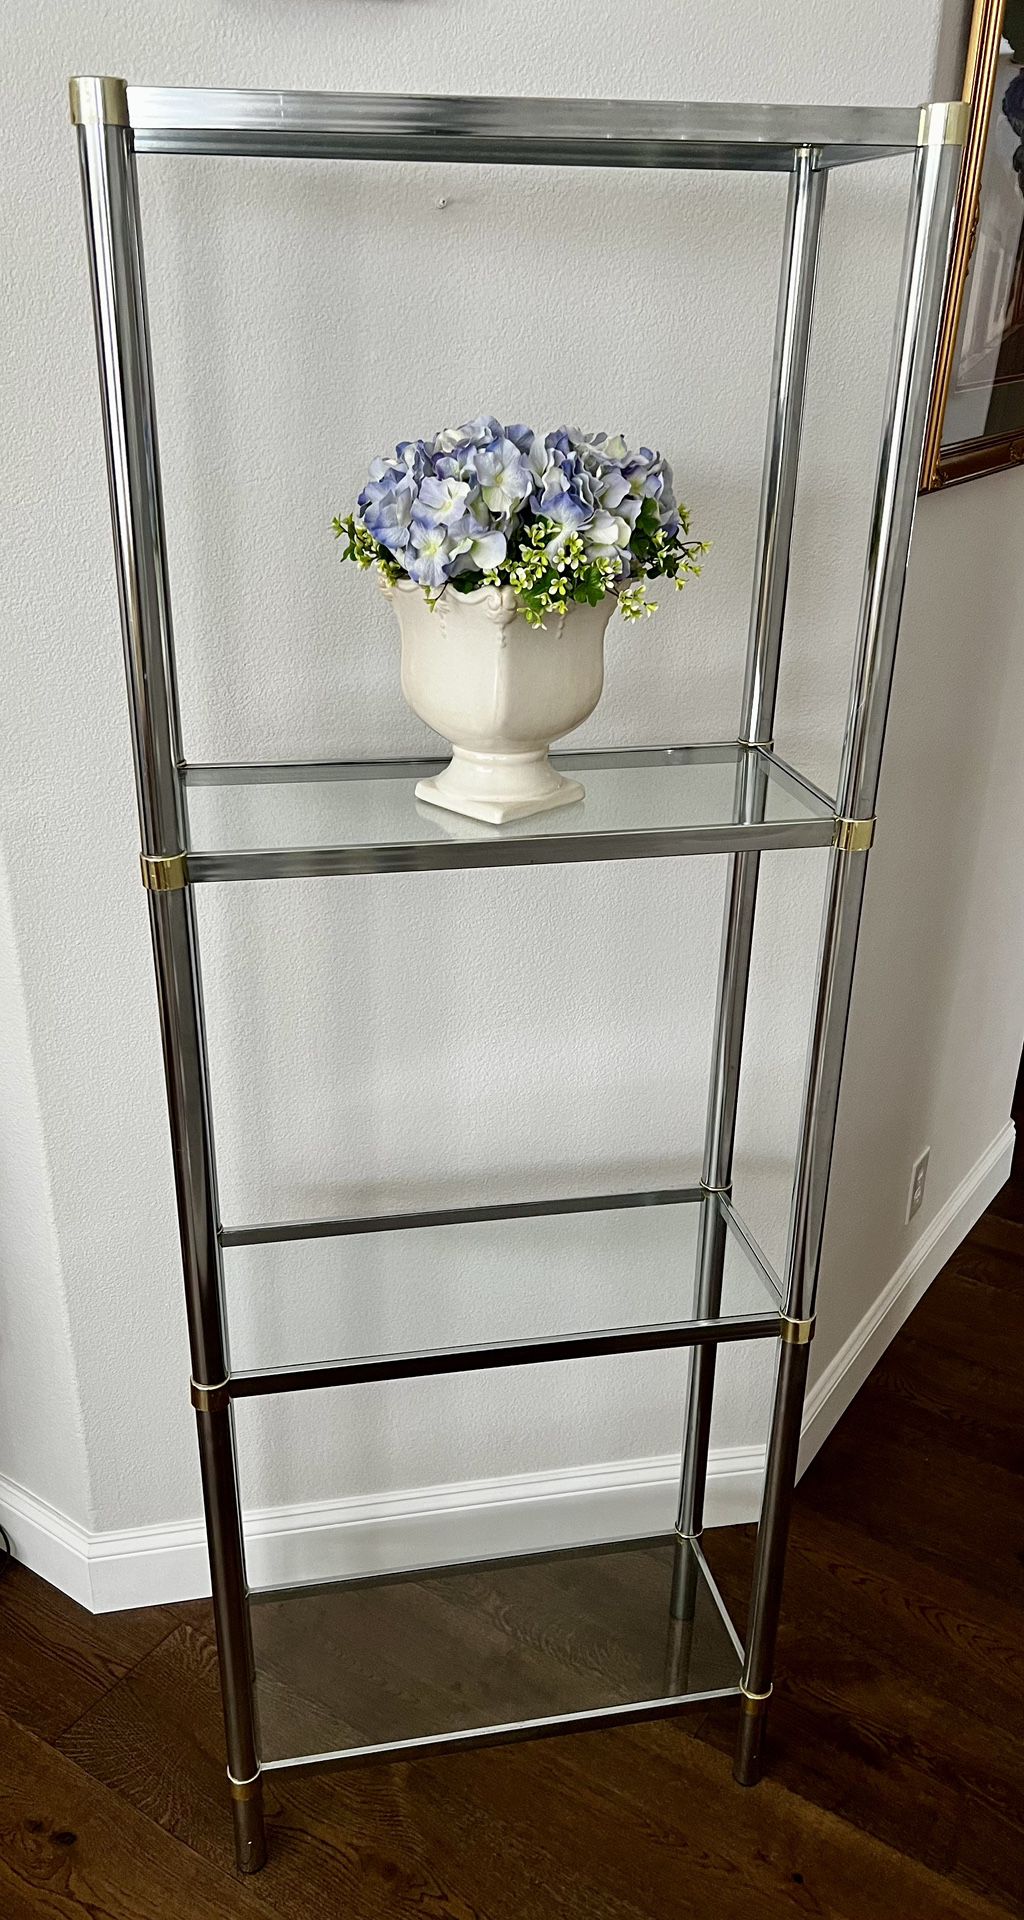 Bookcase - Display Shelf